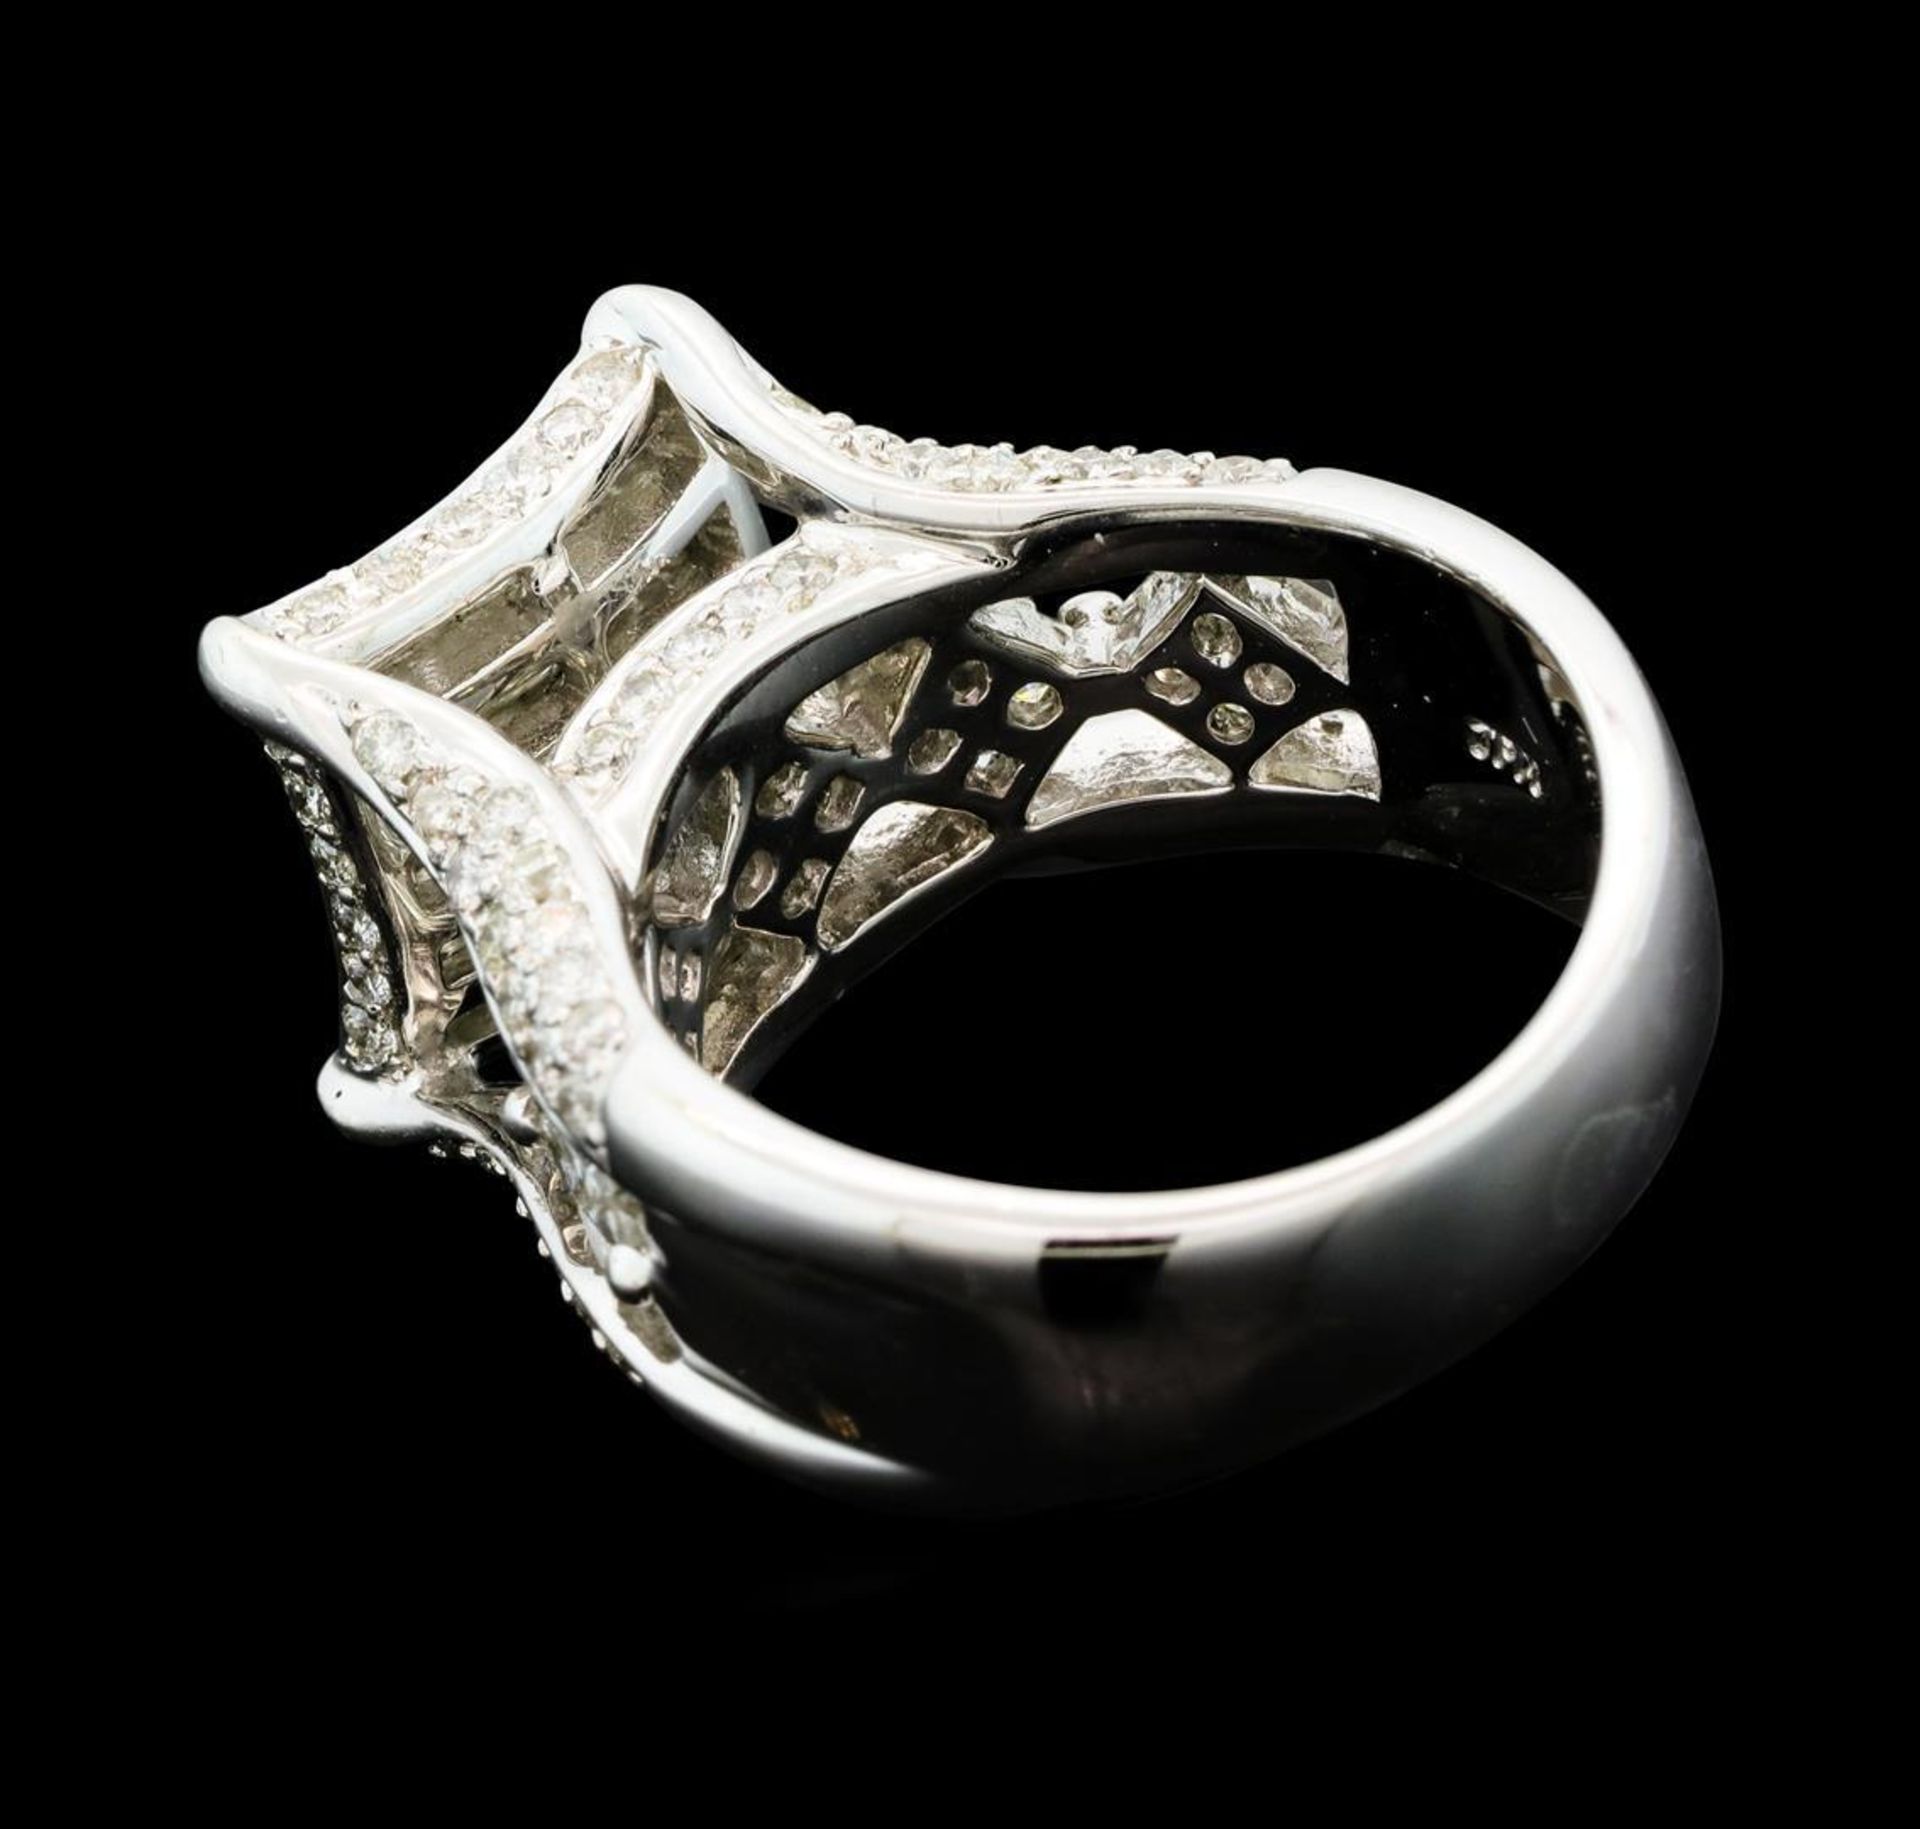 3.12 ctw Diamond Ring - 14KT White Gold - Image 3 of 5